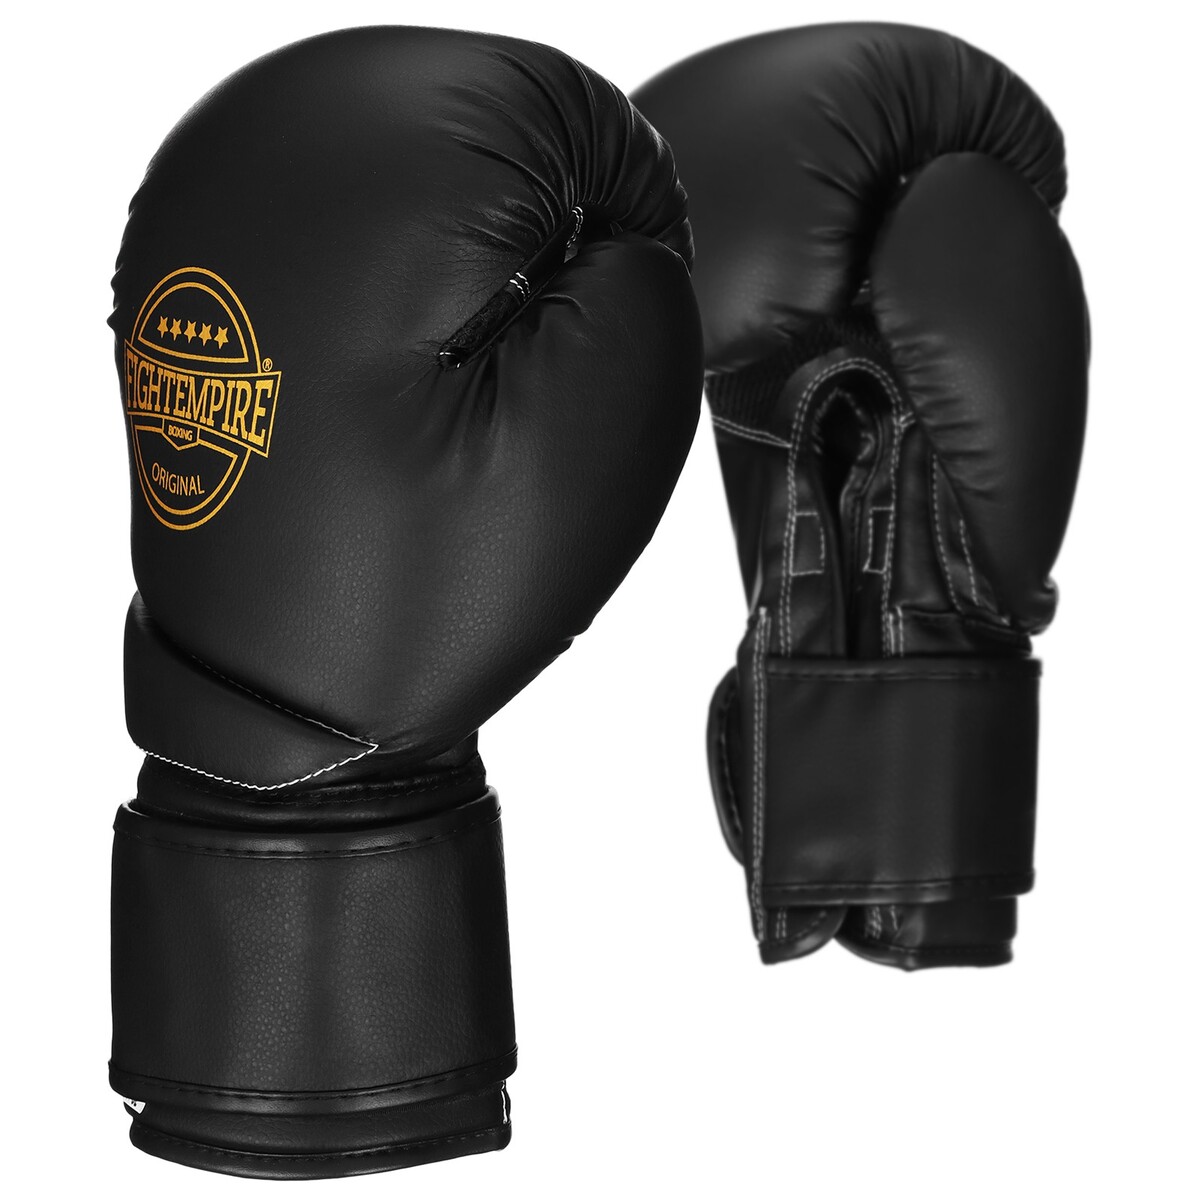 Перчатки боксерские fight empire, platinum, 8 унций перчатки боксерские вес 14 унций clinch aero c135 сине